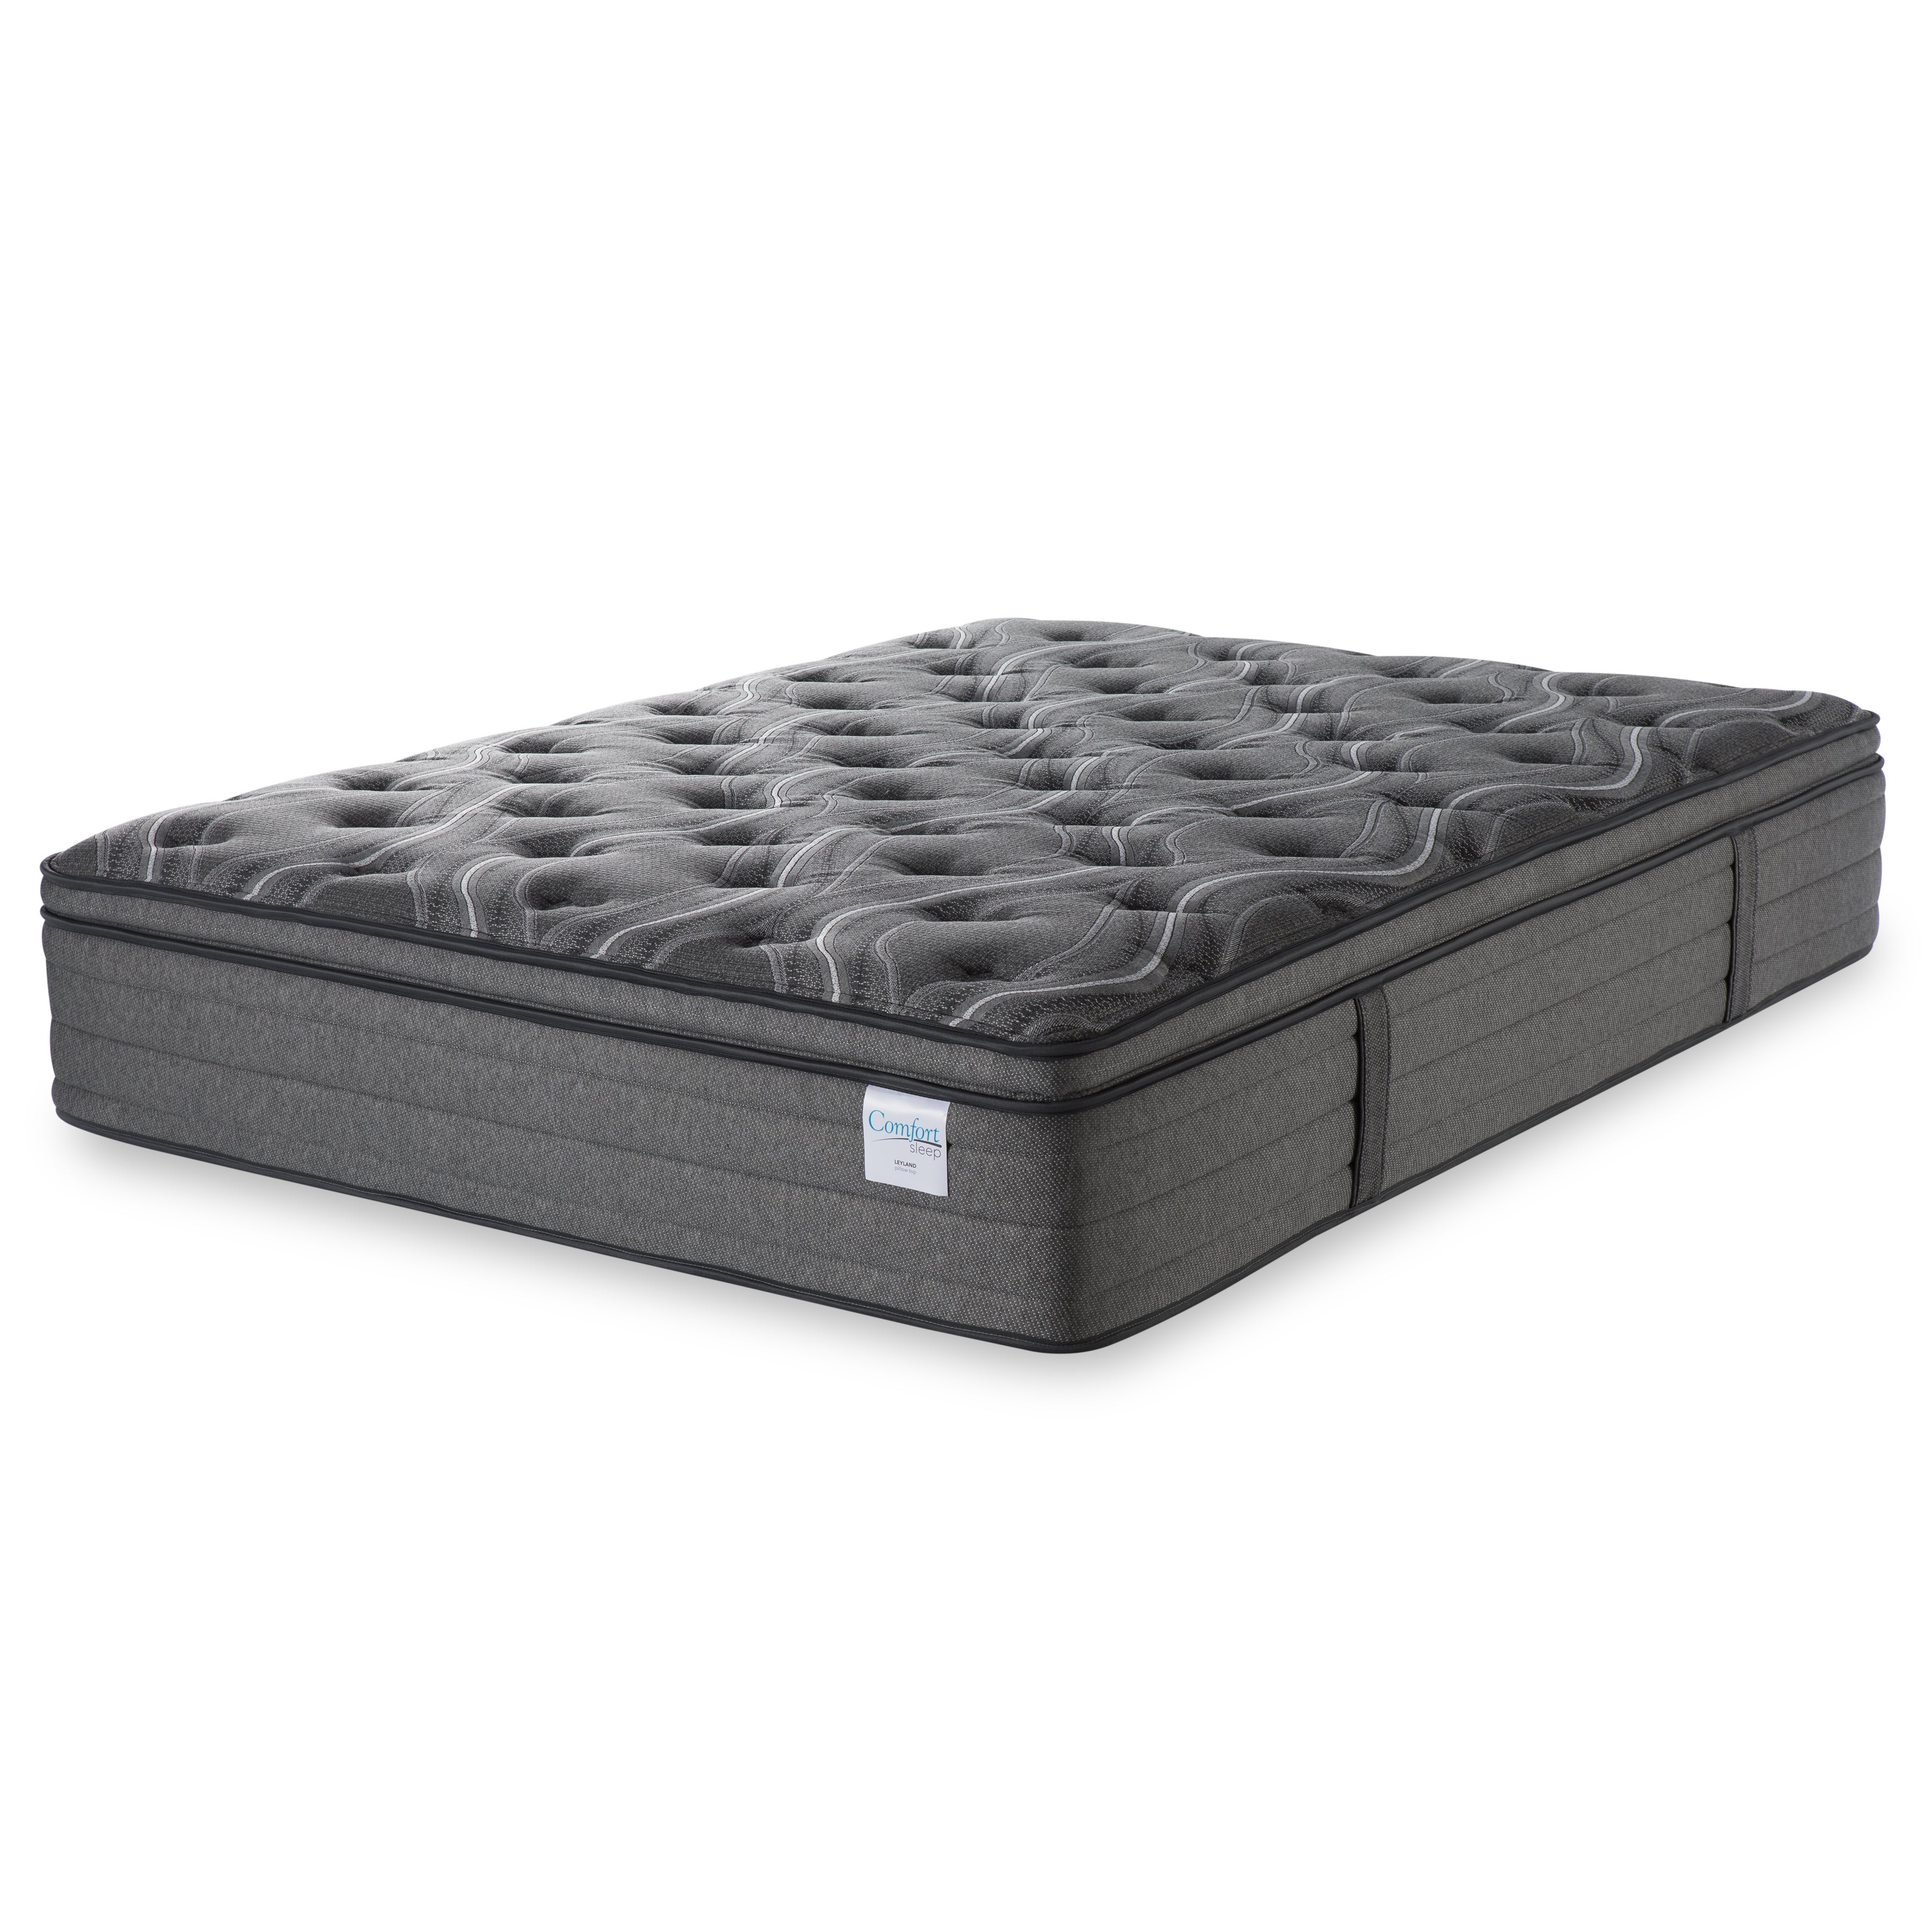 comfort-sleep-leyland-pillowtop-king-mattress